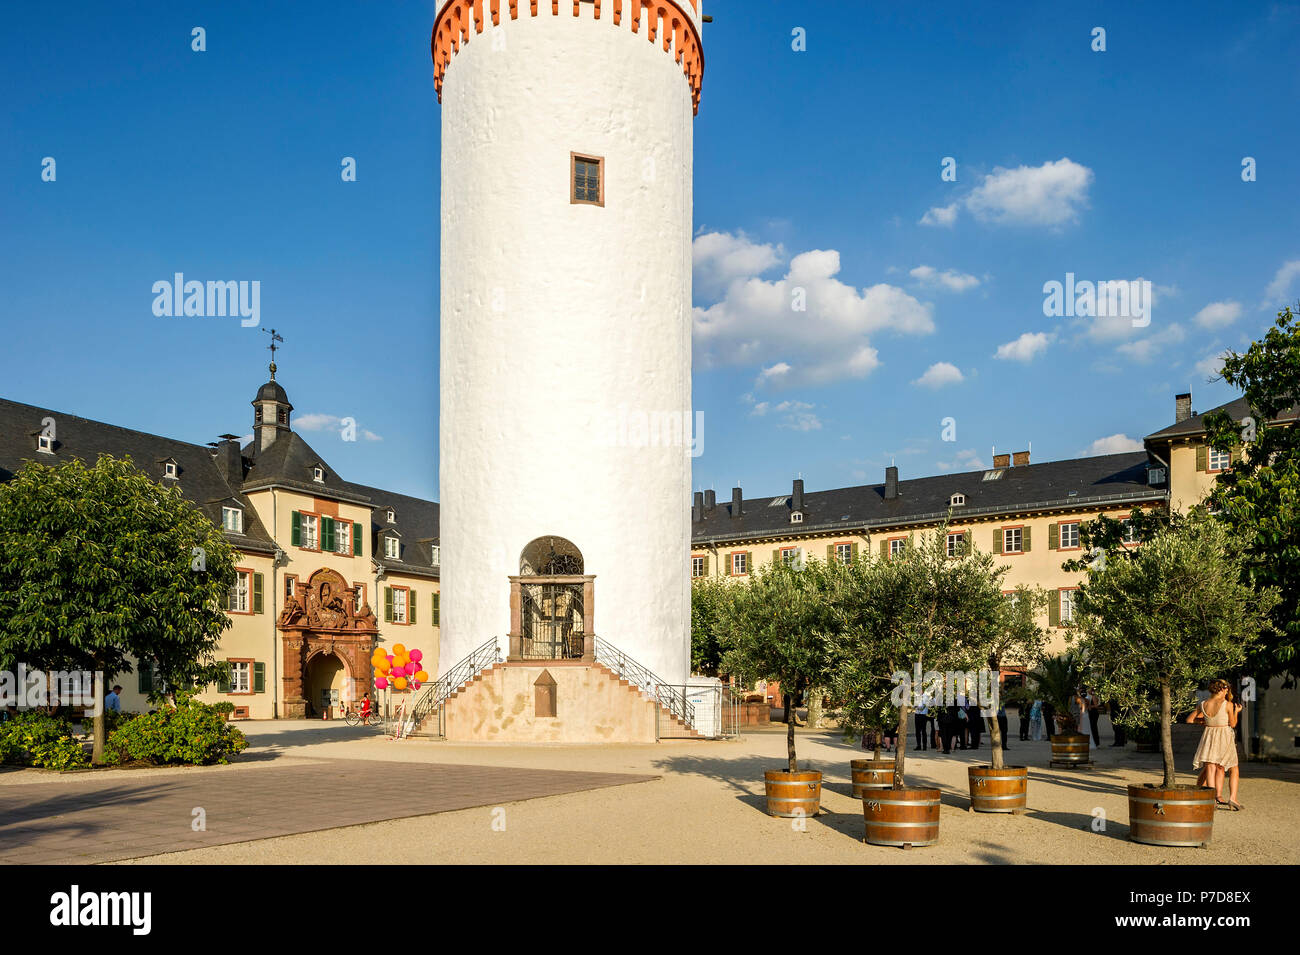 Medieval donjon, White Tower, courtyard, Landgrave's castle, Bad Homburg vor der Höhe, Hesse, Germany Stock Photo